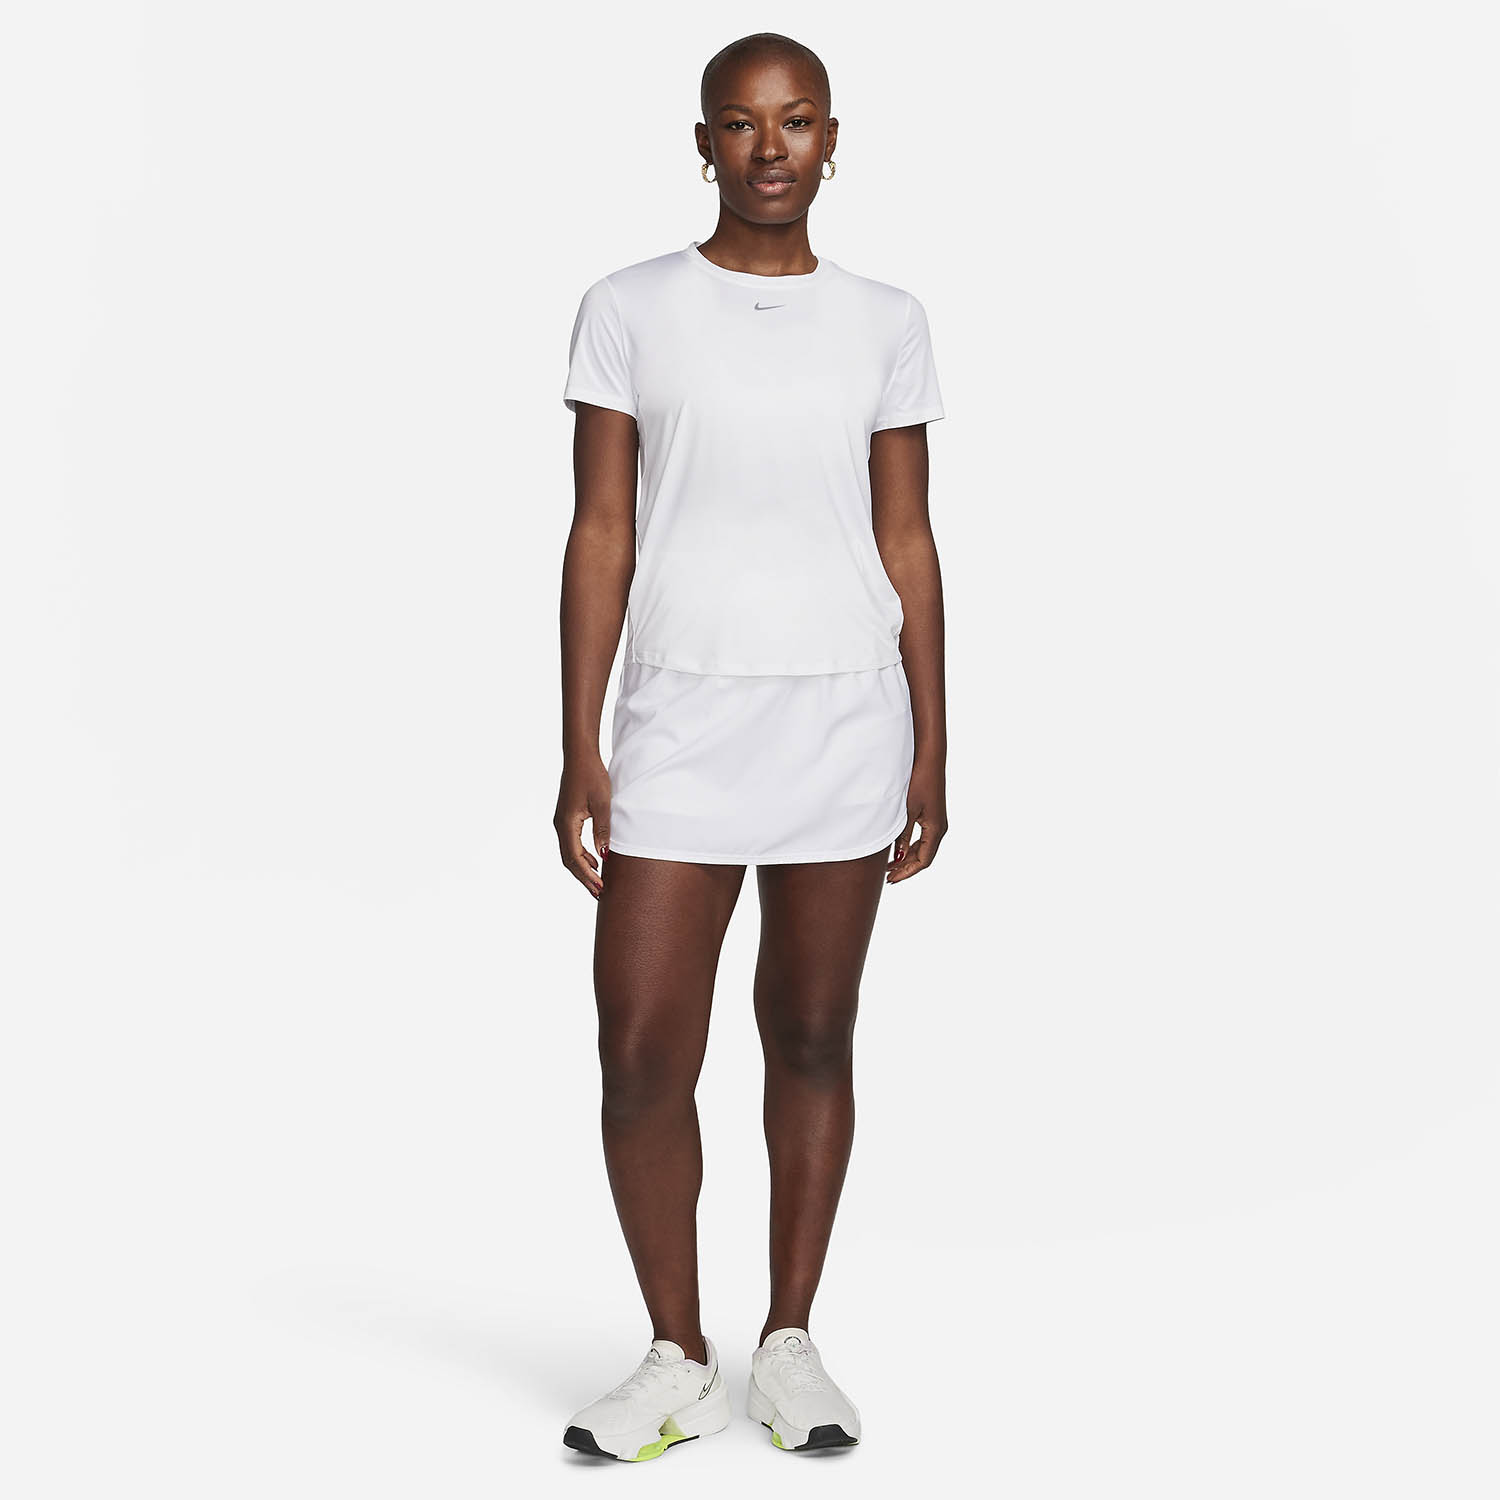 Nike One Classic Camiseta - White/Black